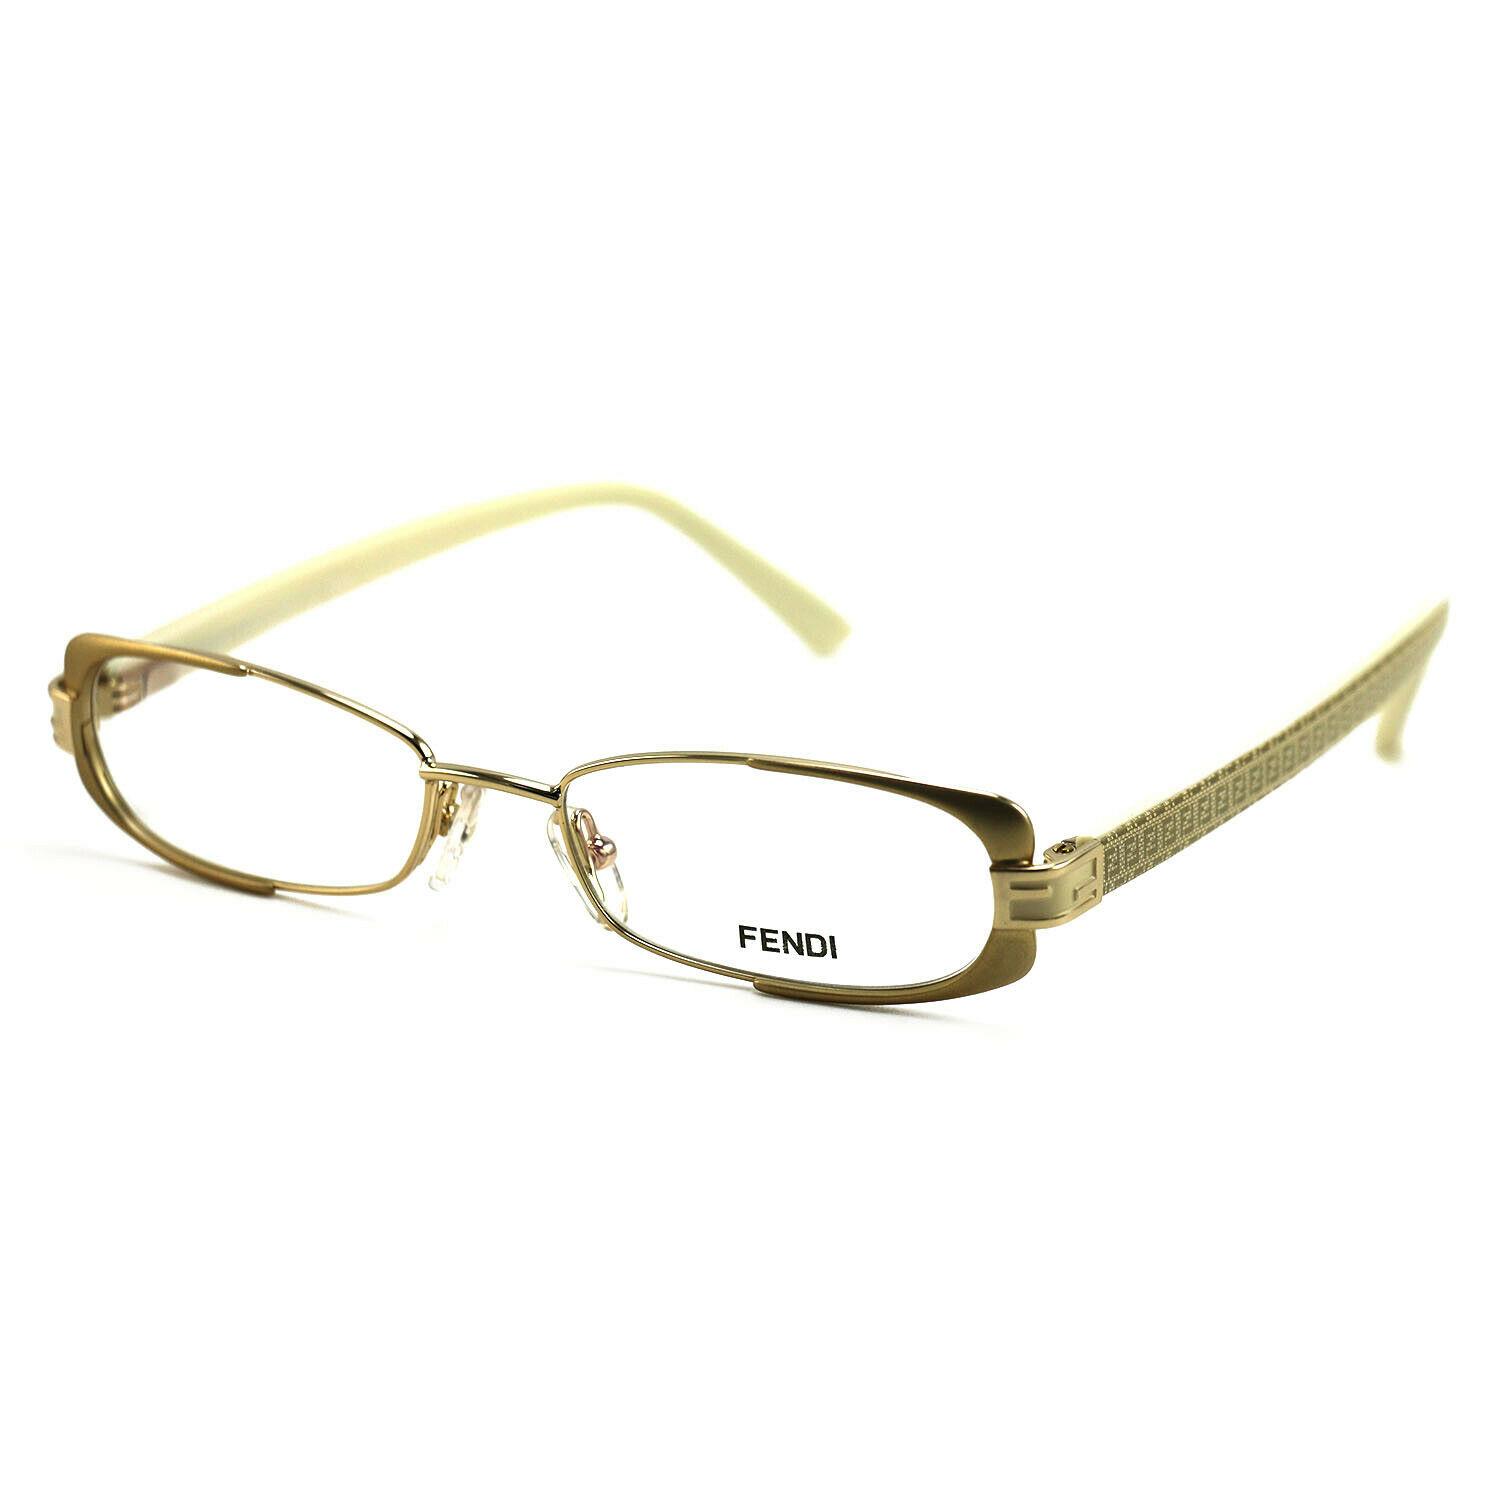 Fendi Women`s Eyeglasses F943 714 Gold/beige 49 16 135 Frames Oval